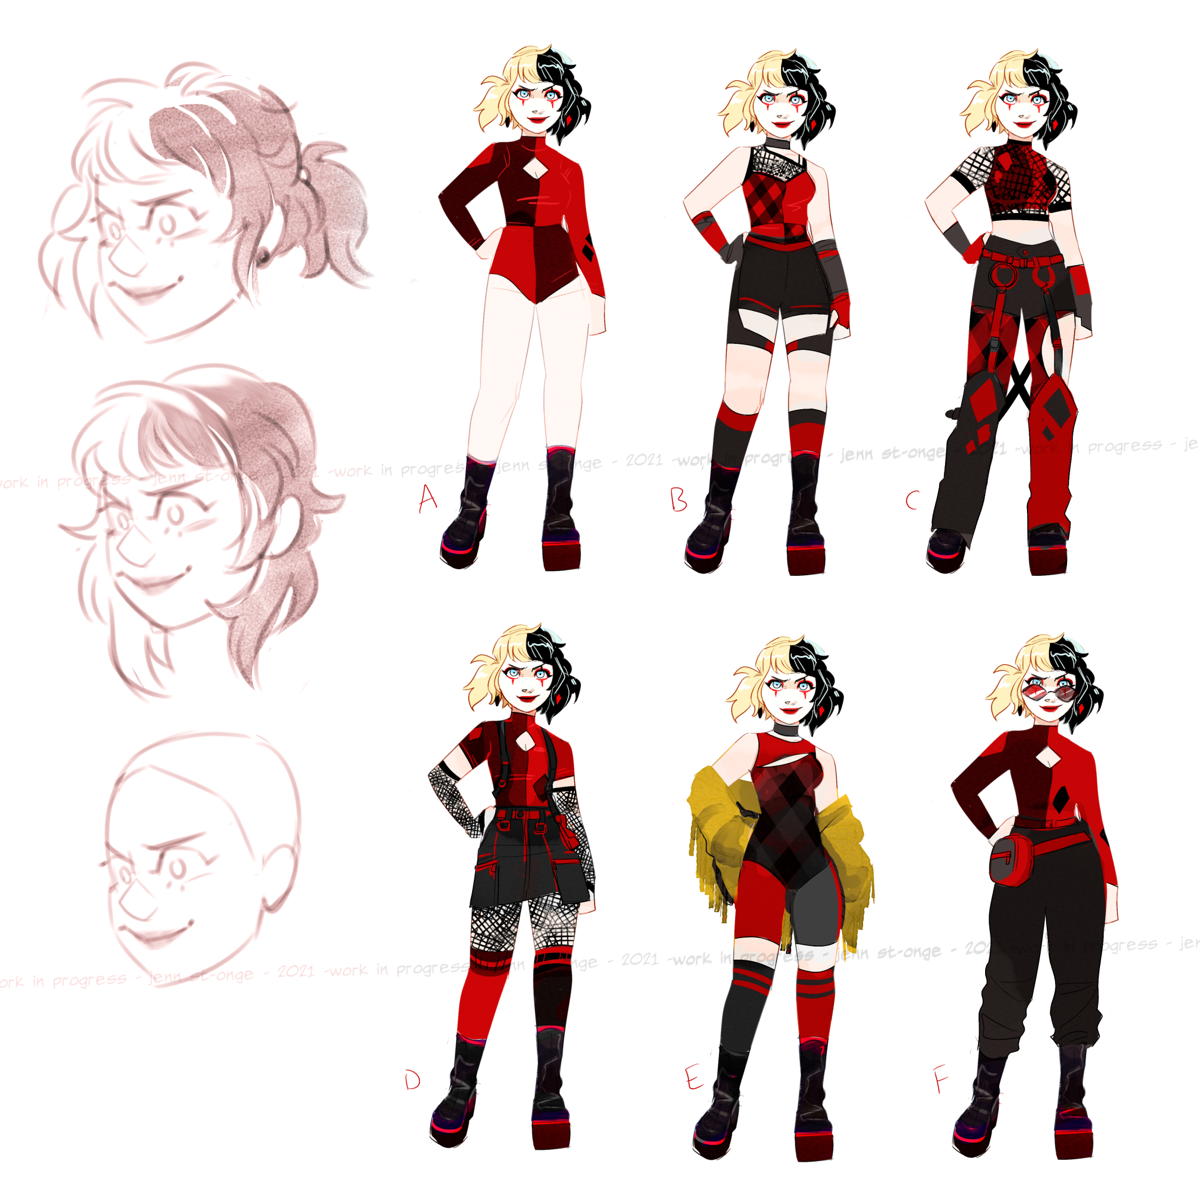 Harley Quinn_character designs